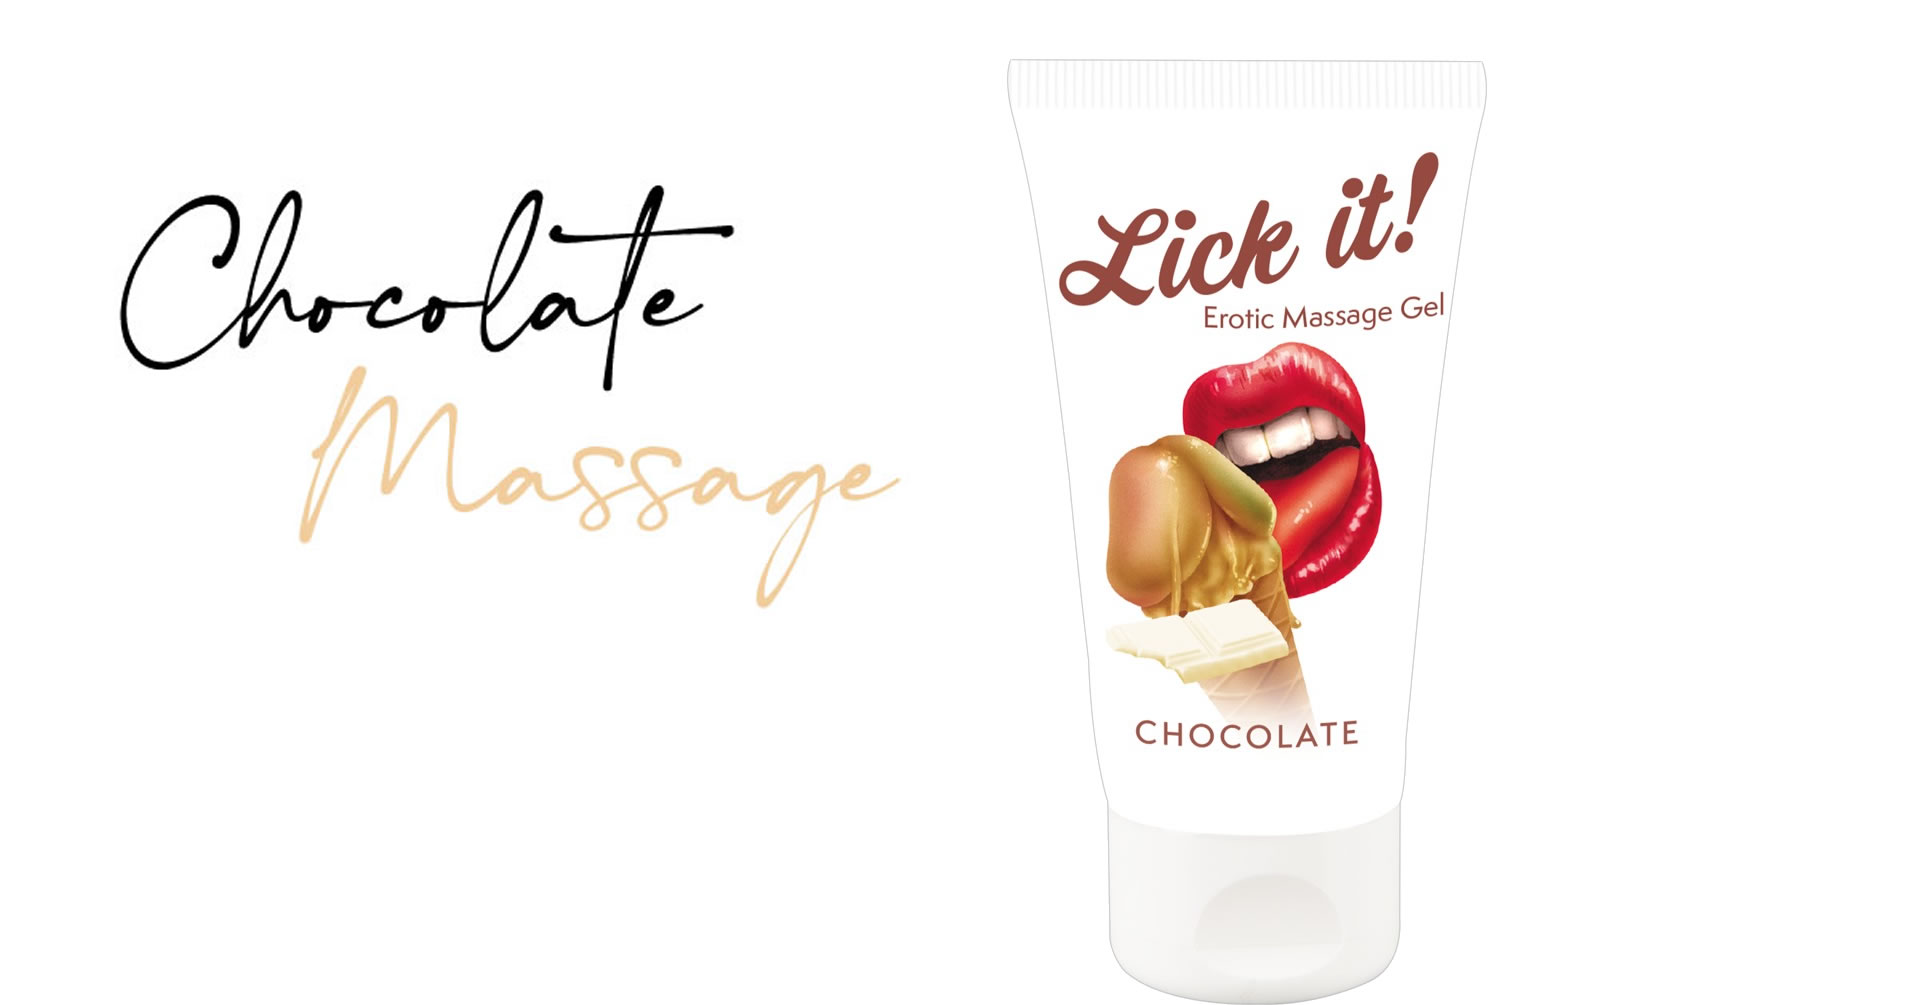 Lick-it chocolate Massage Gel